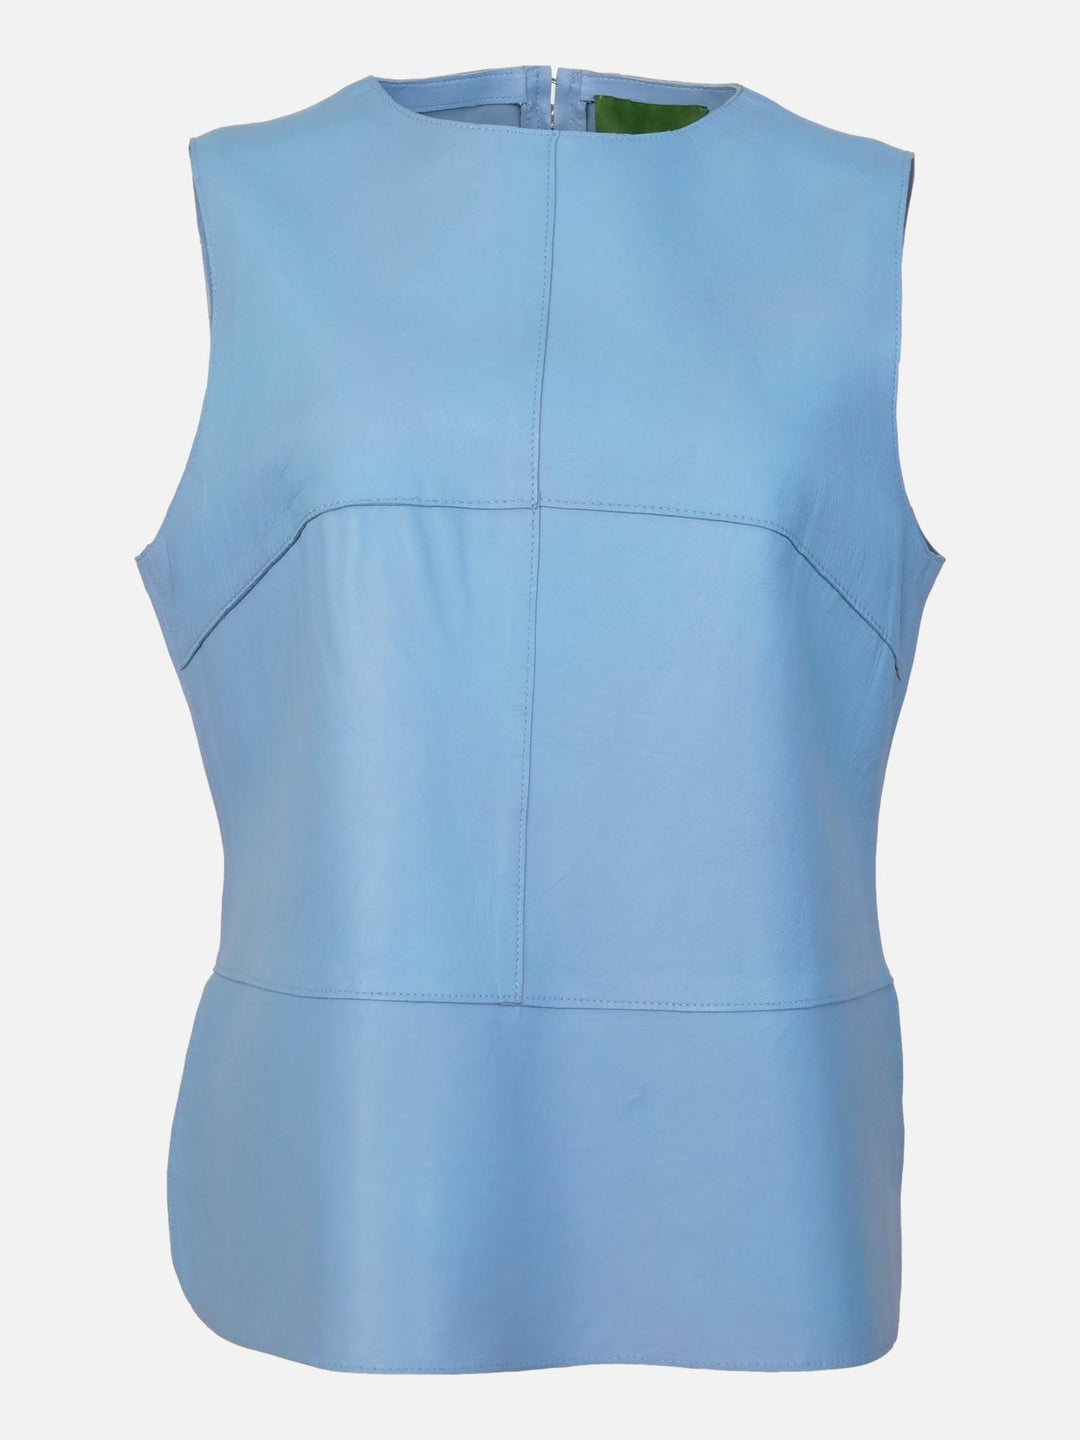 Hope Väst, 59 cm. - Lamb Dior Bonded Leather-Women - Skye Blue